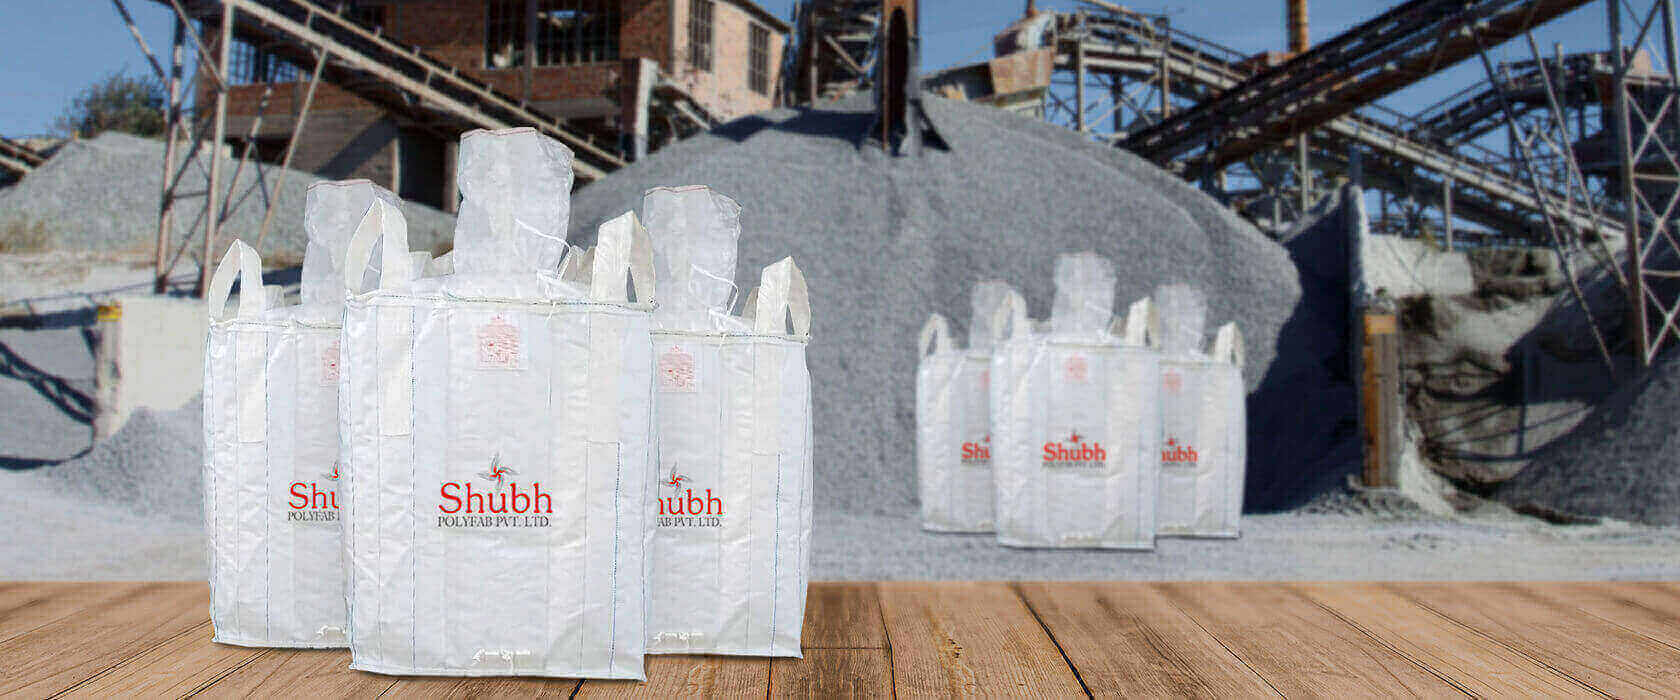 multiple Big bags of shubh polyfab brand